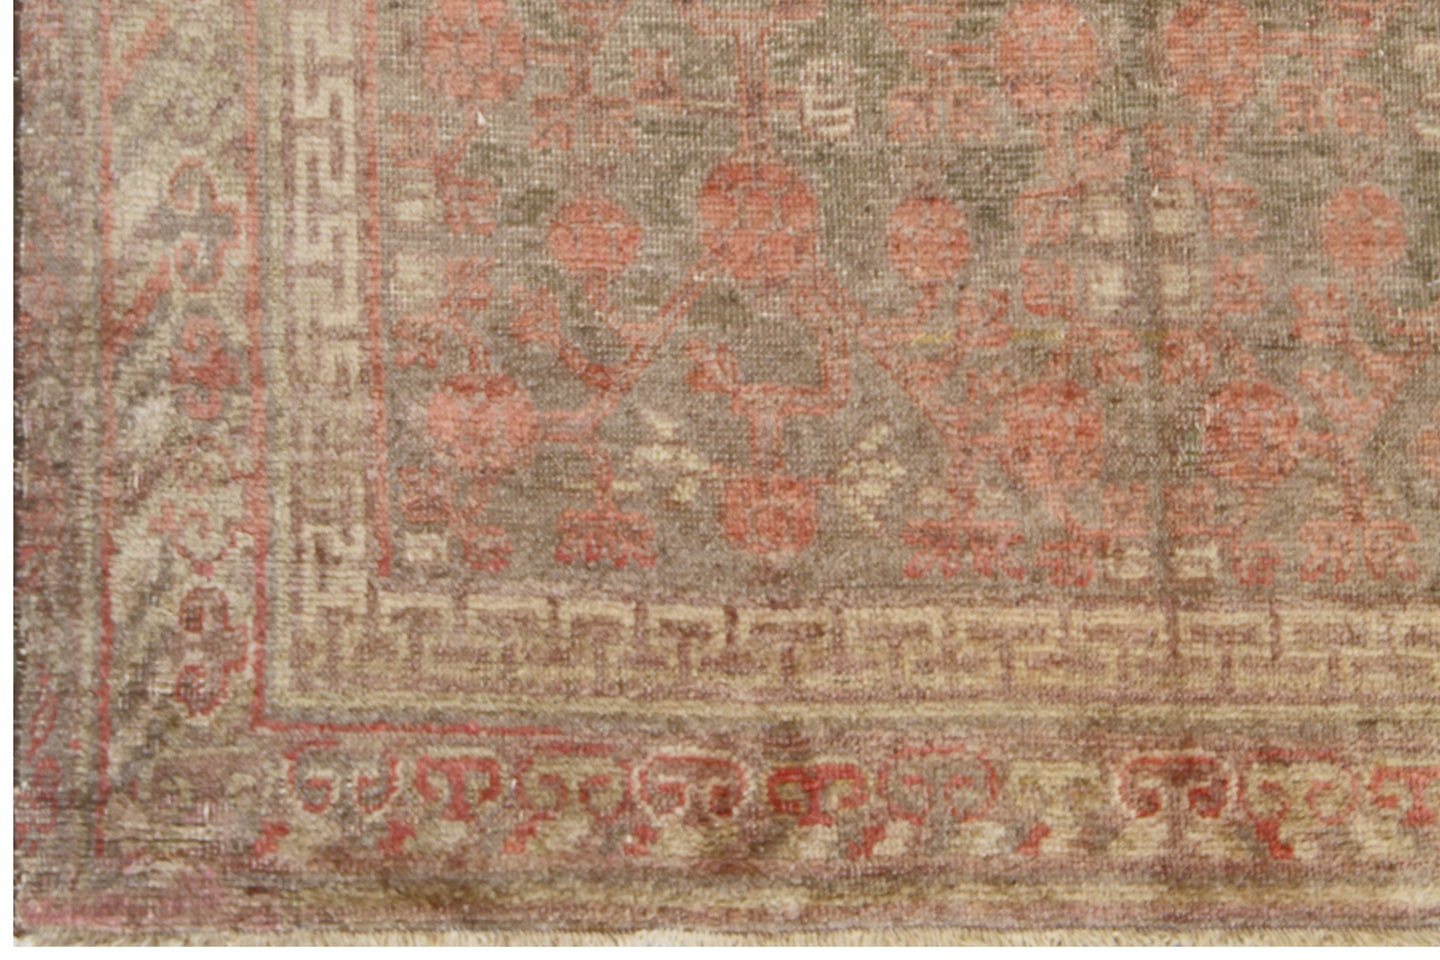 9.07 x 5.00 Antique Hand-Knotted Samarkand Pomegranate Design Rug Area Rug